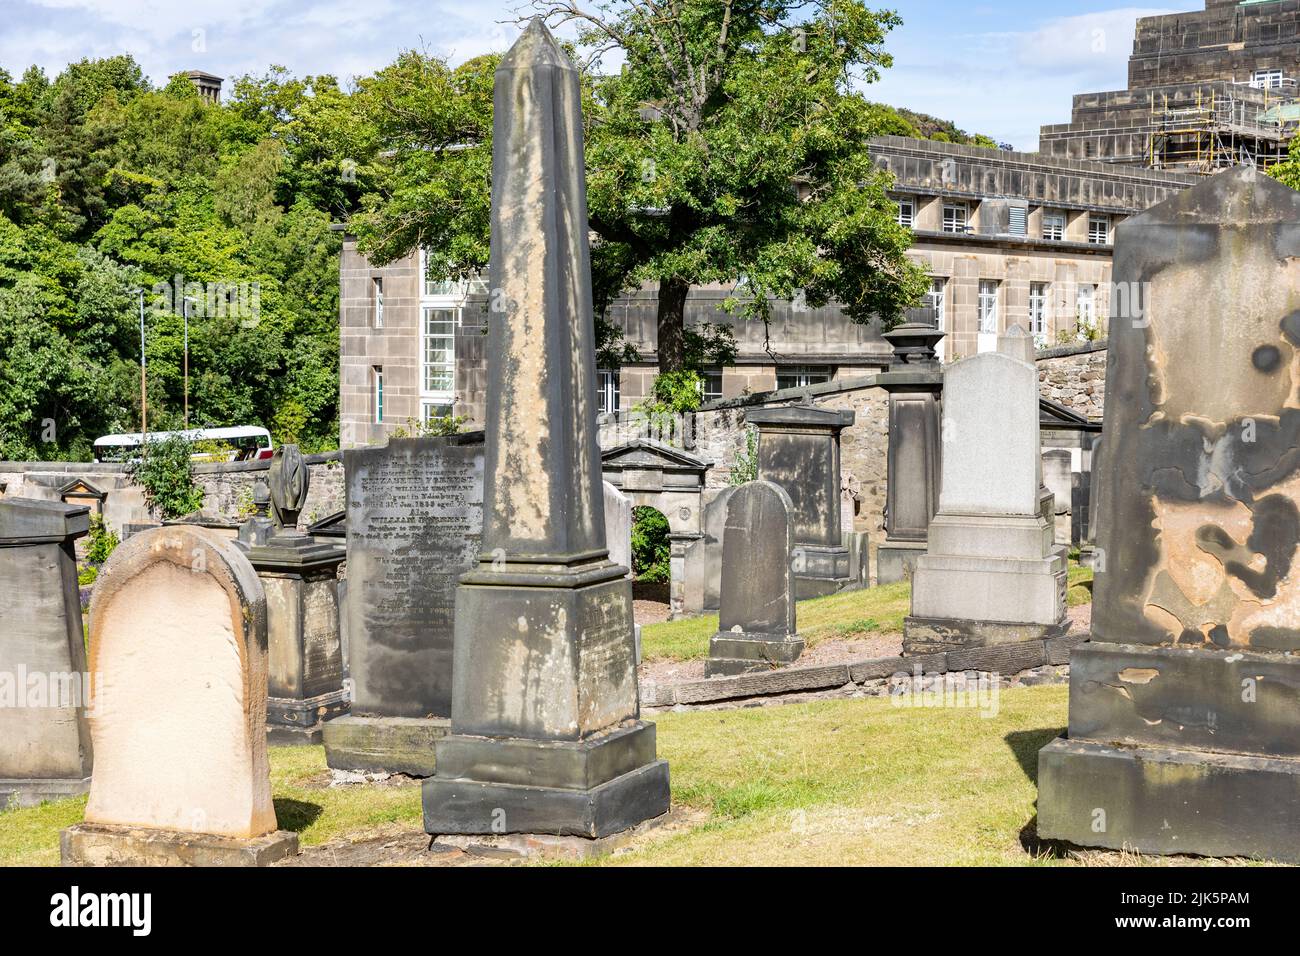 Edinburgh Old Calton Burial ground in the city centre of Edinburgh with headstones and gravestones,Scotland,Uk summer 2022 Stock Photo